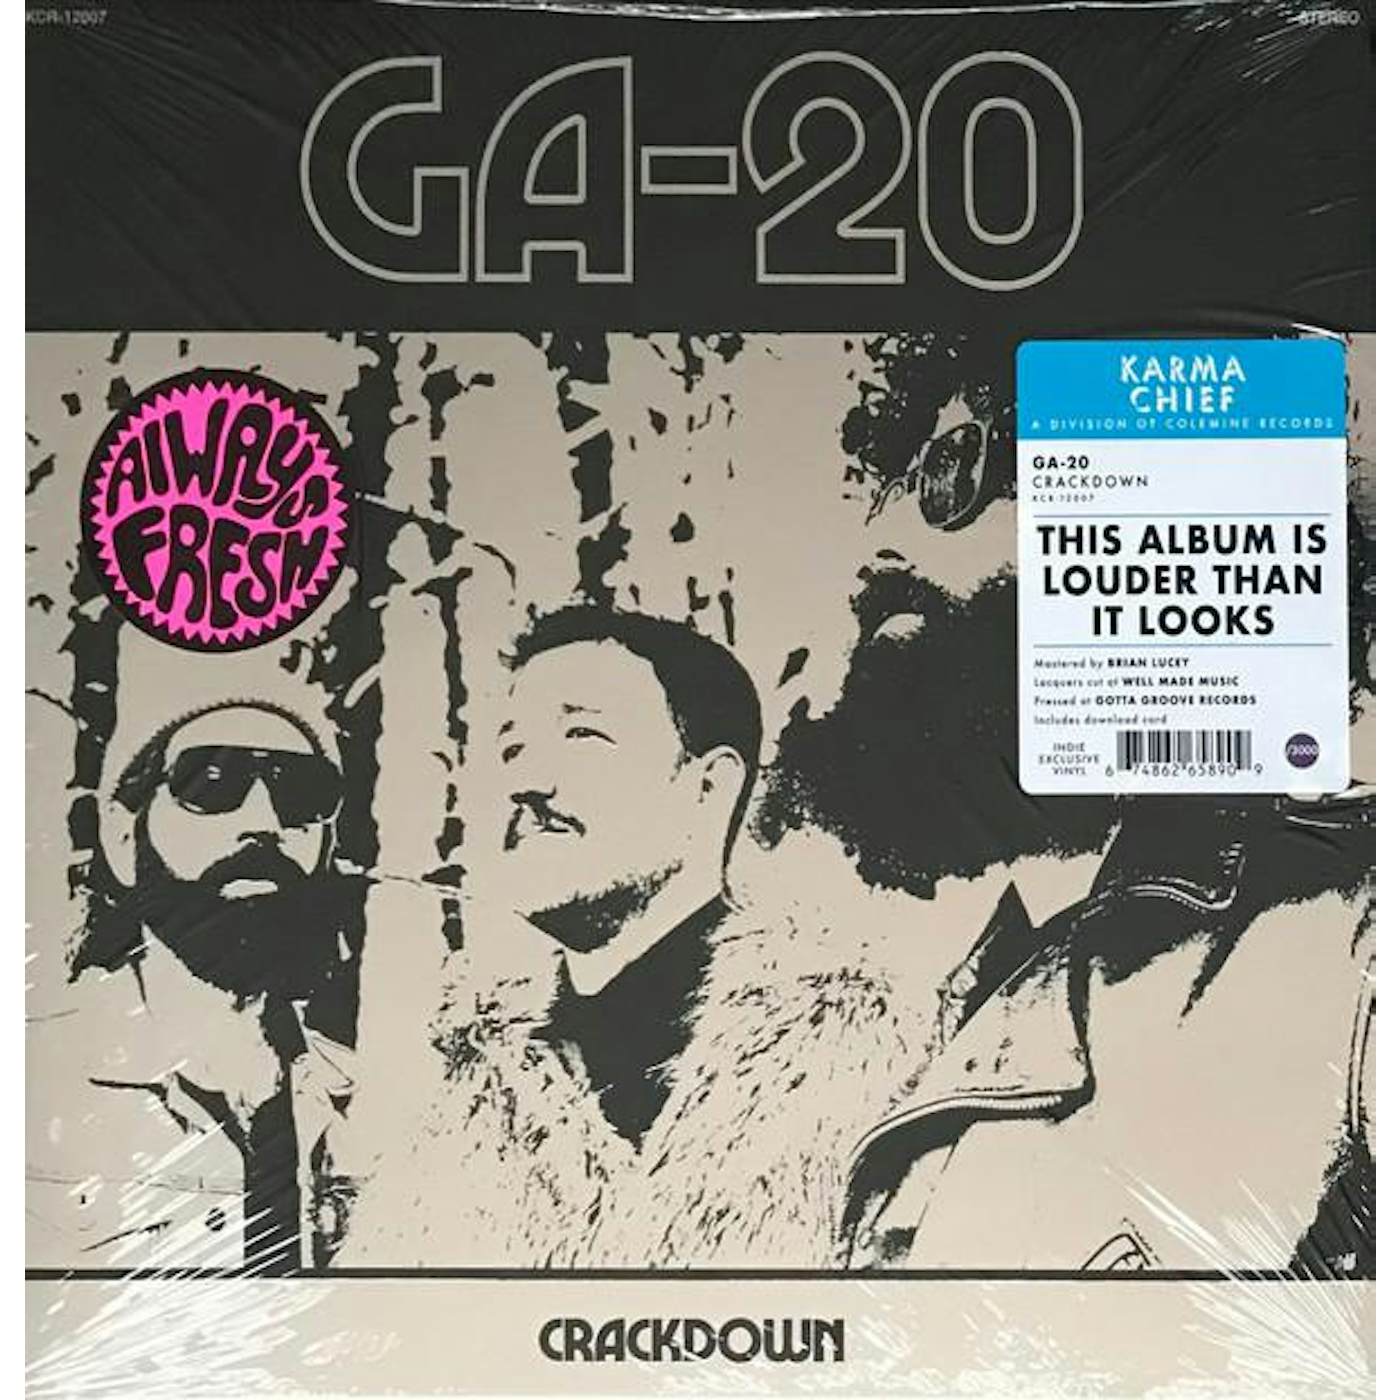 GA-20 CRACKDOWN (PURPLE VINYL) (I) Vinyl Record